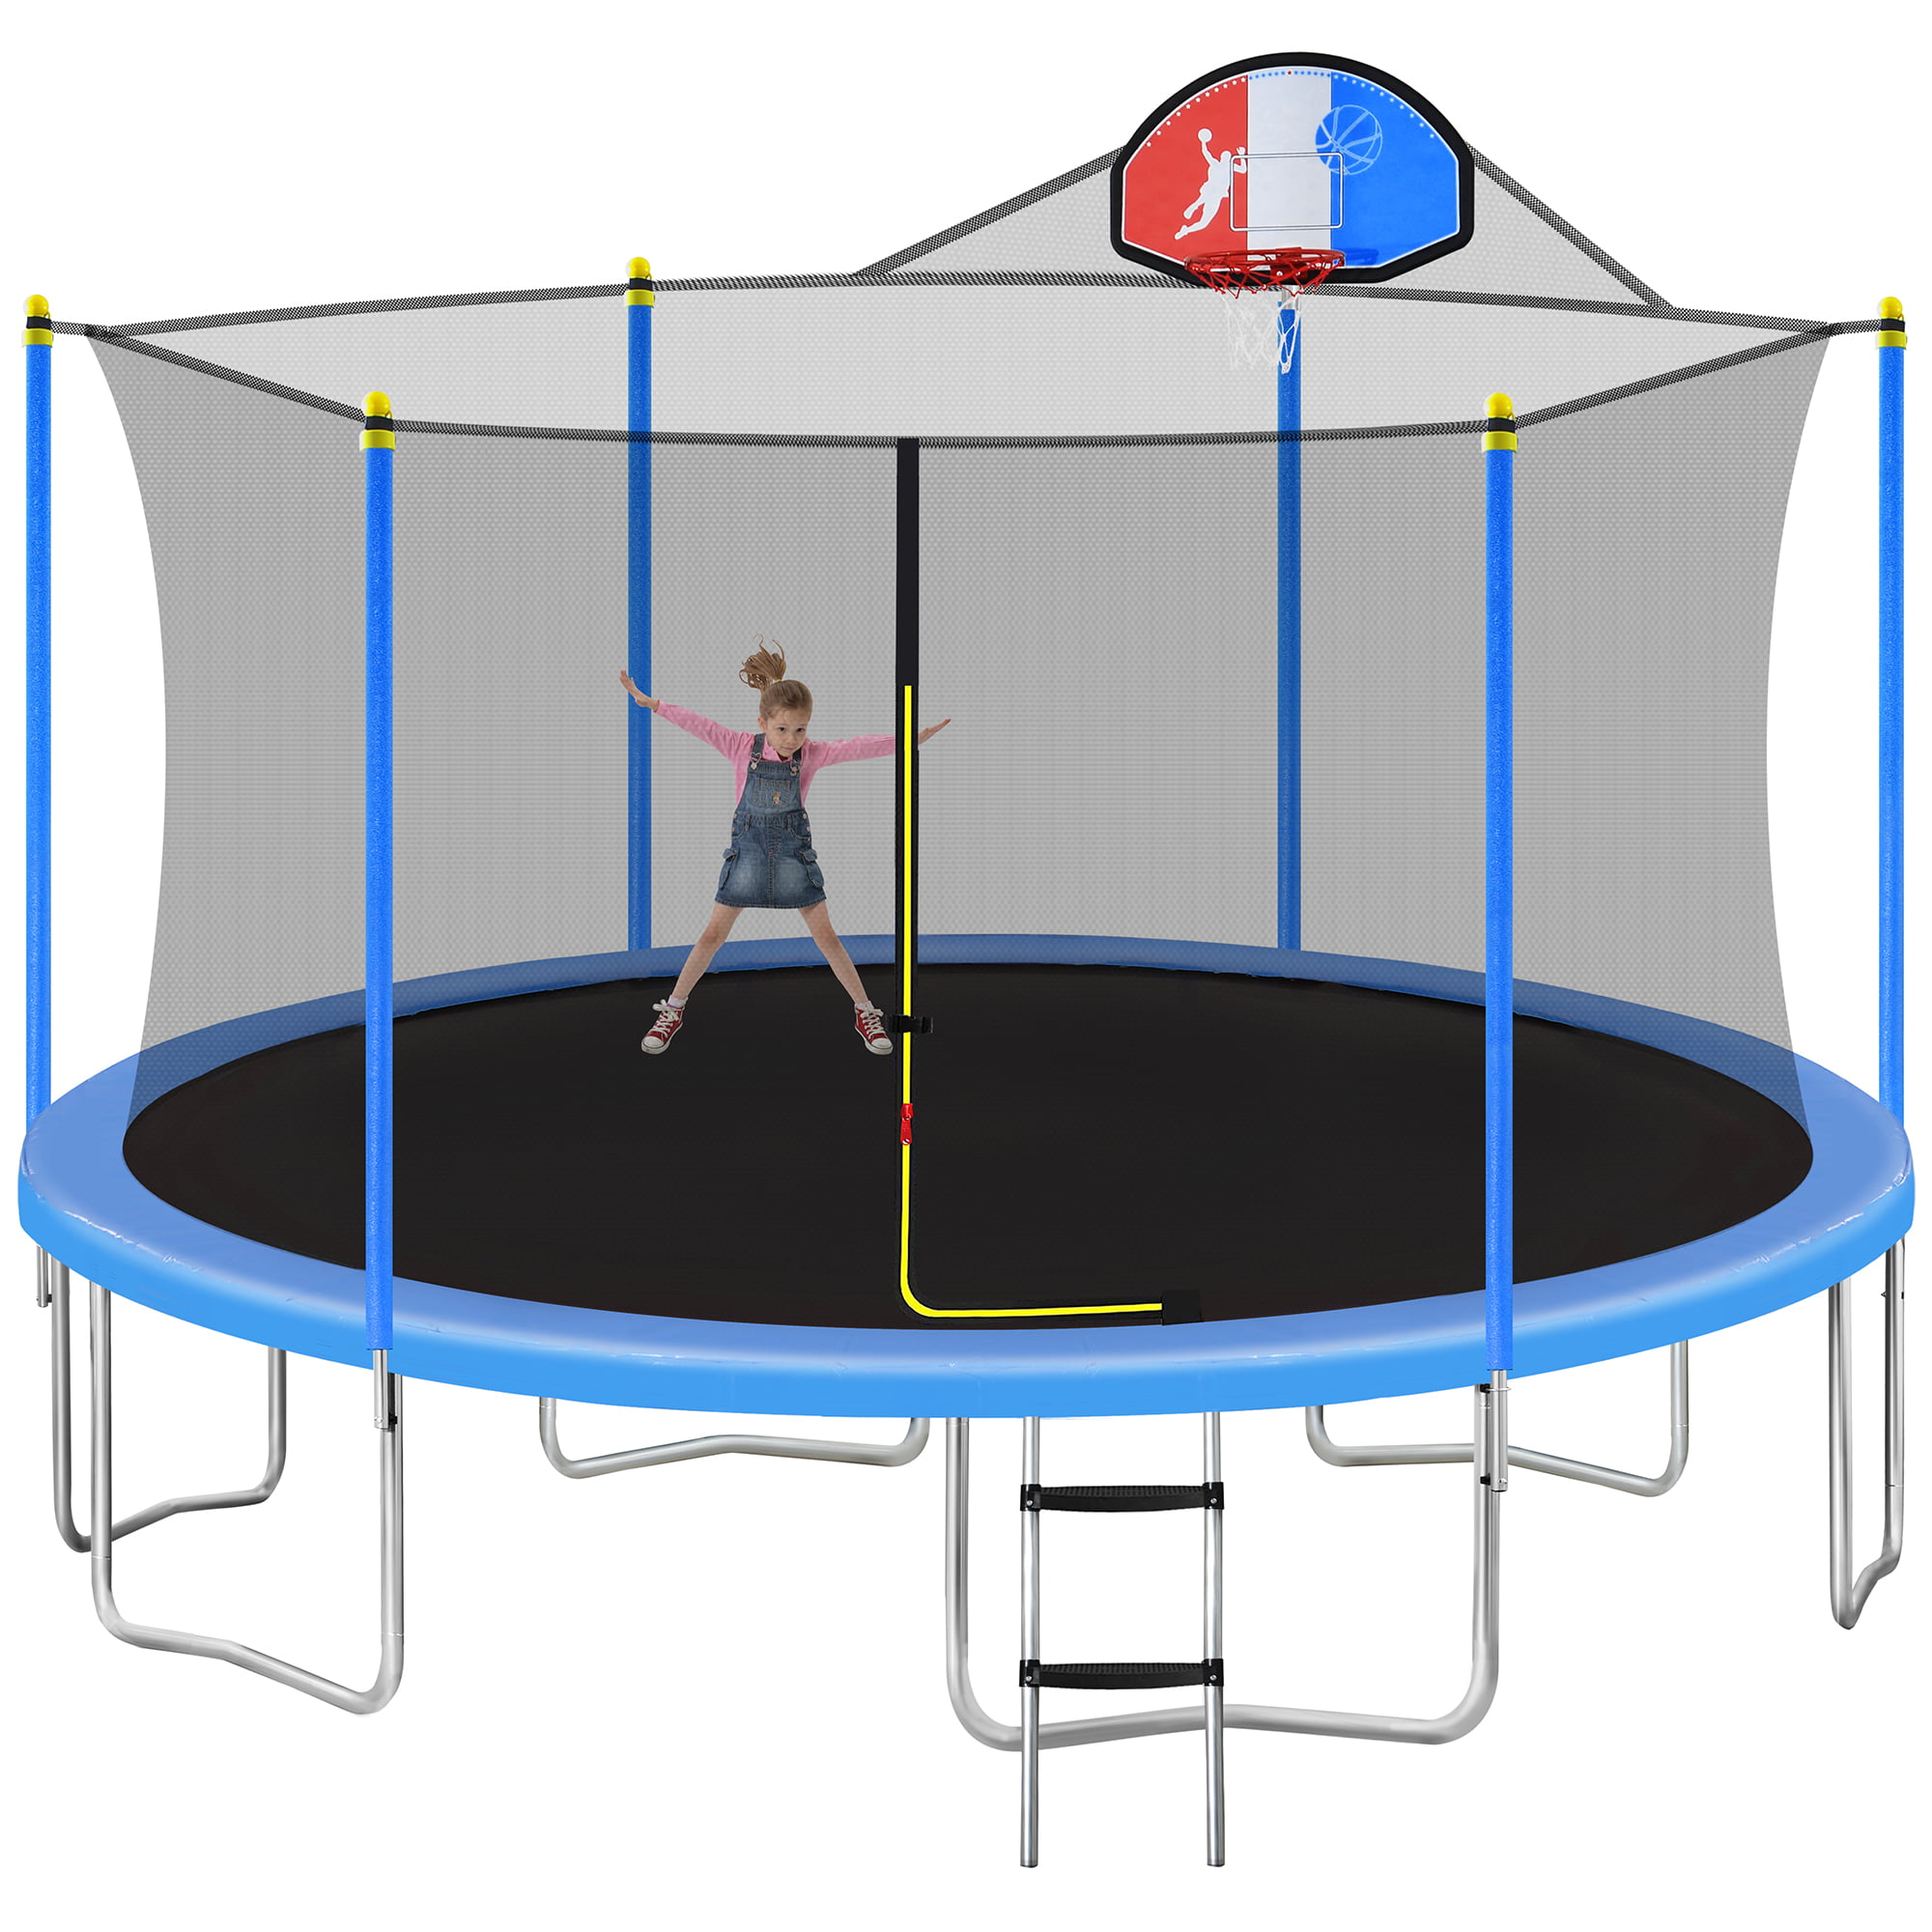 Rampoline Safety Enclosure Indoor Outdoor Trampoline for Kids W/Basketball Hoop 